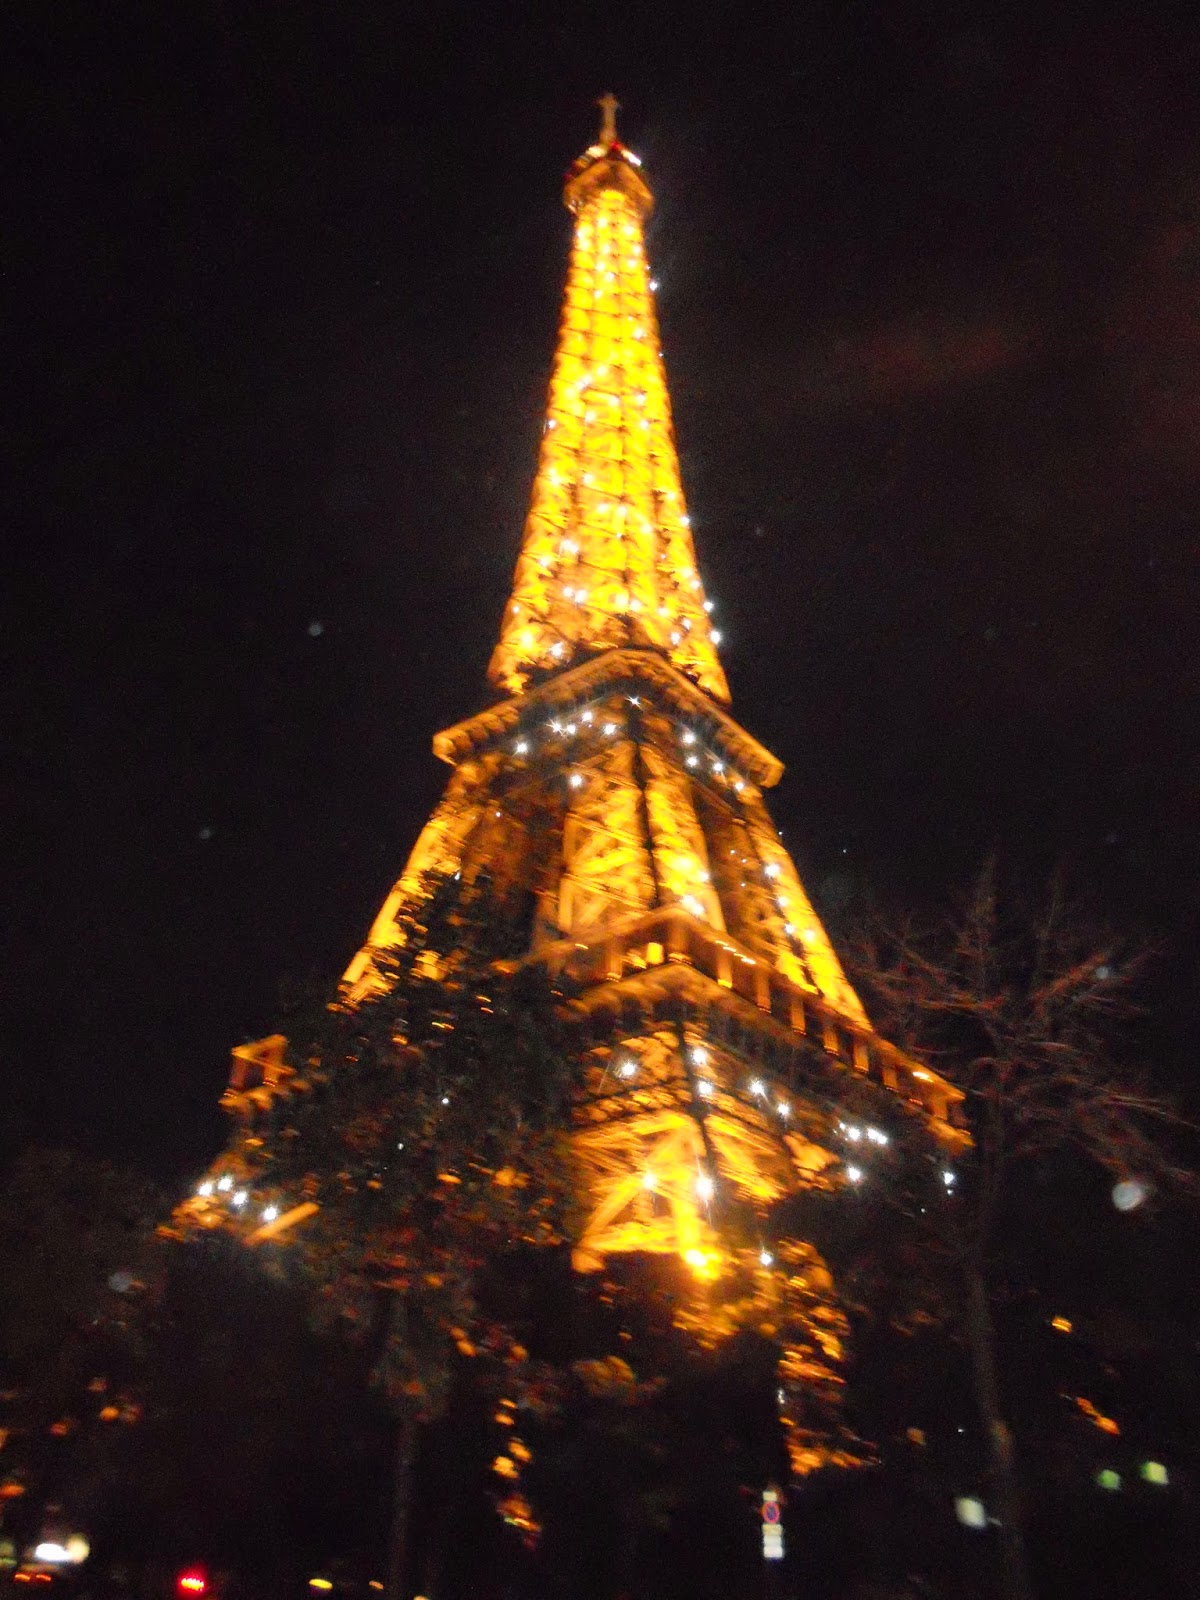 the beauty breakdown morgansbbd paris france study abroad travel eiffel tower